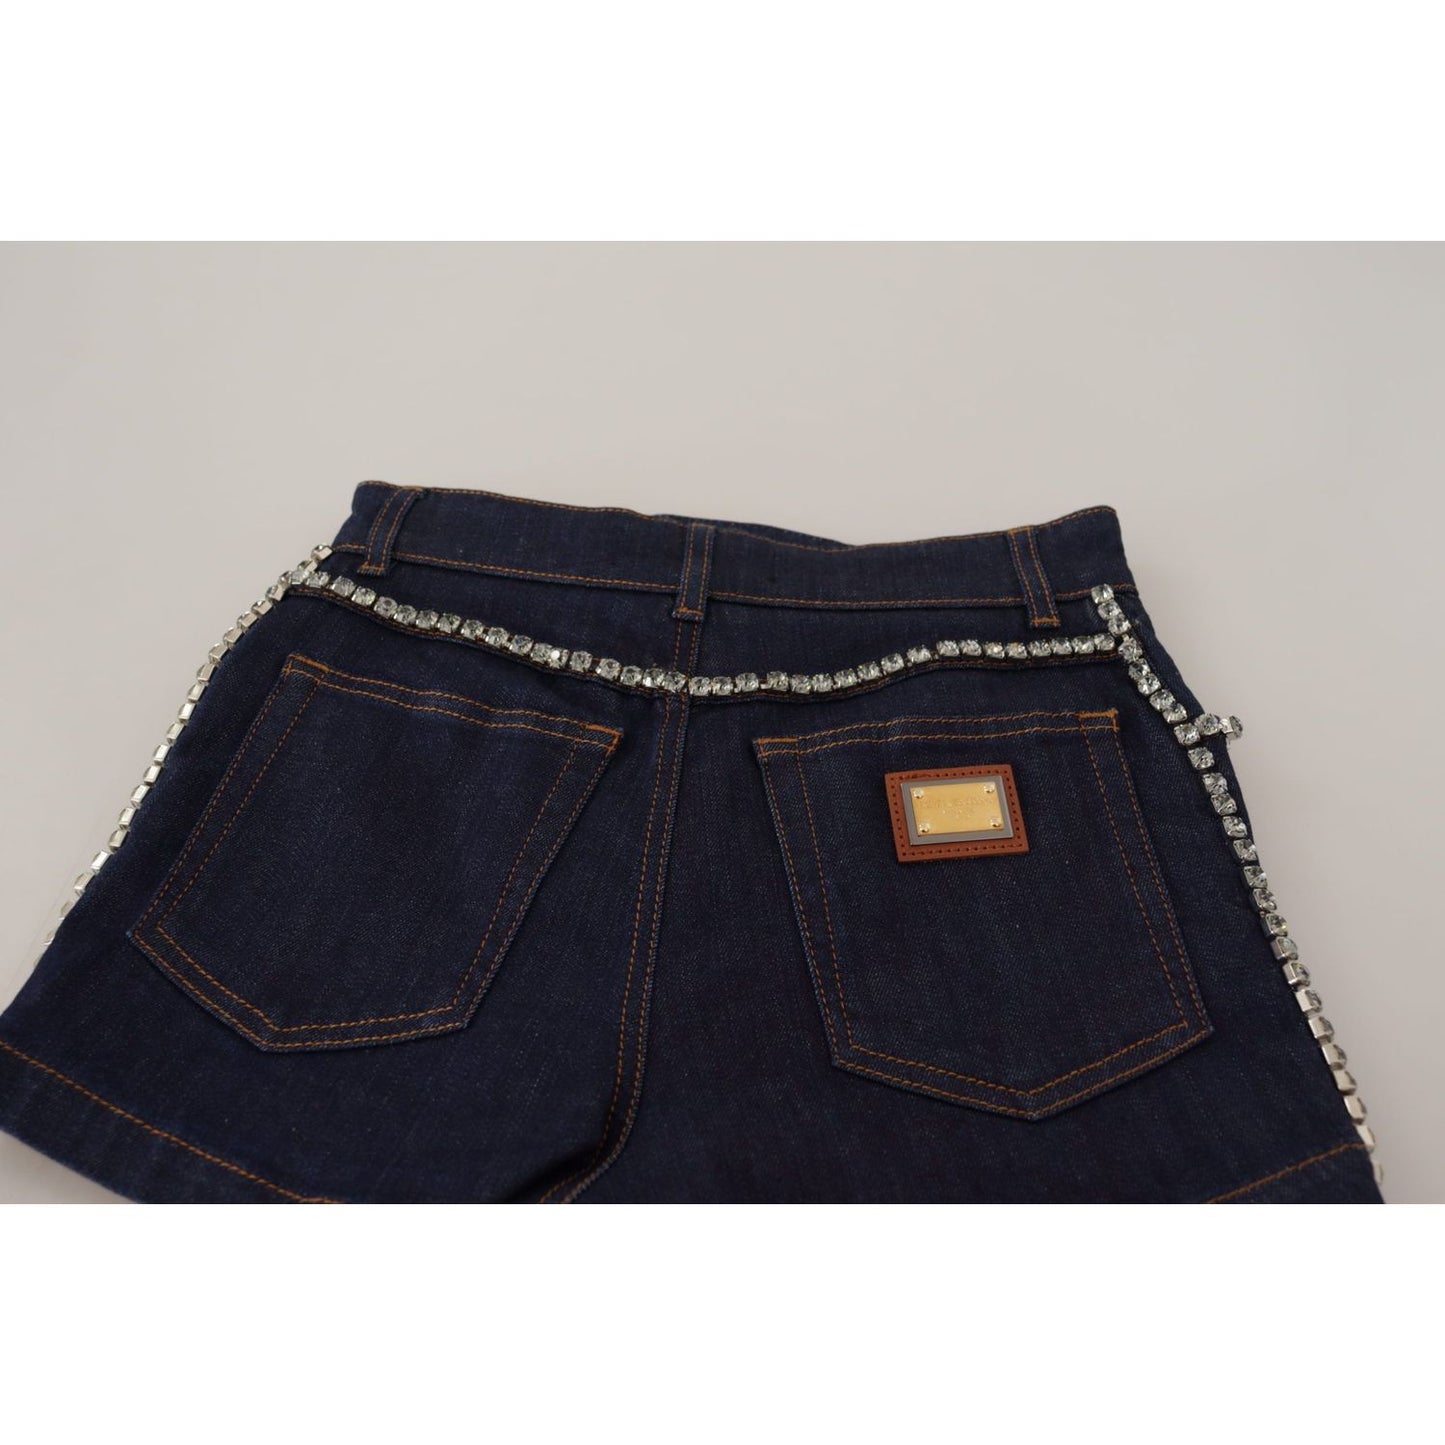 Dolce & Gabbana Chic High Waist Hot Pants Shorts with Crystal Detailing blue-denim-stretch-crystal-hot-pants-shorts